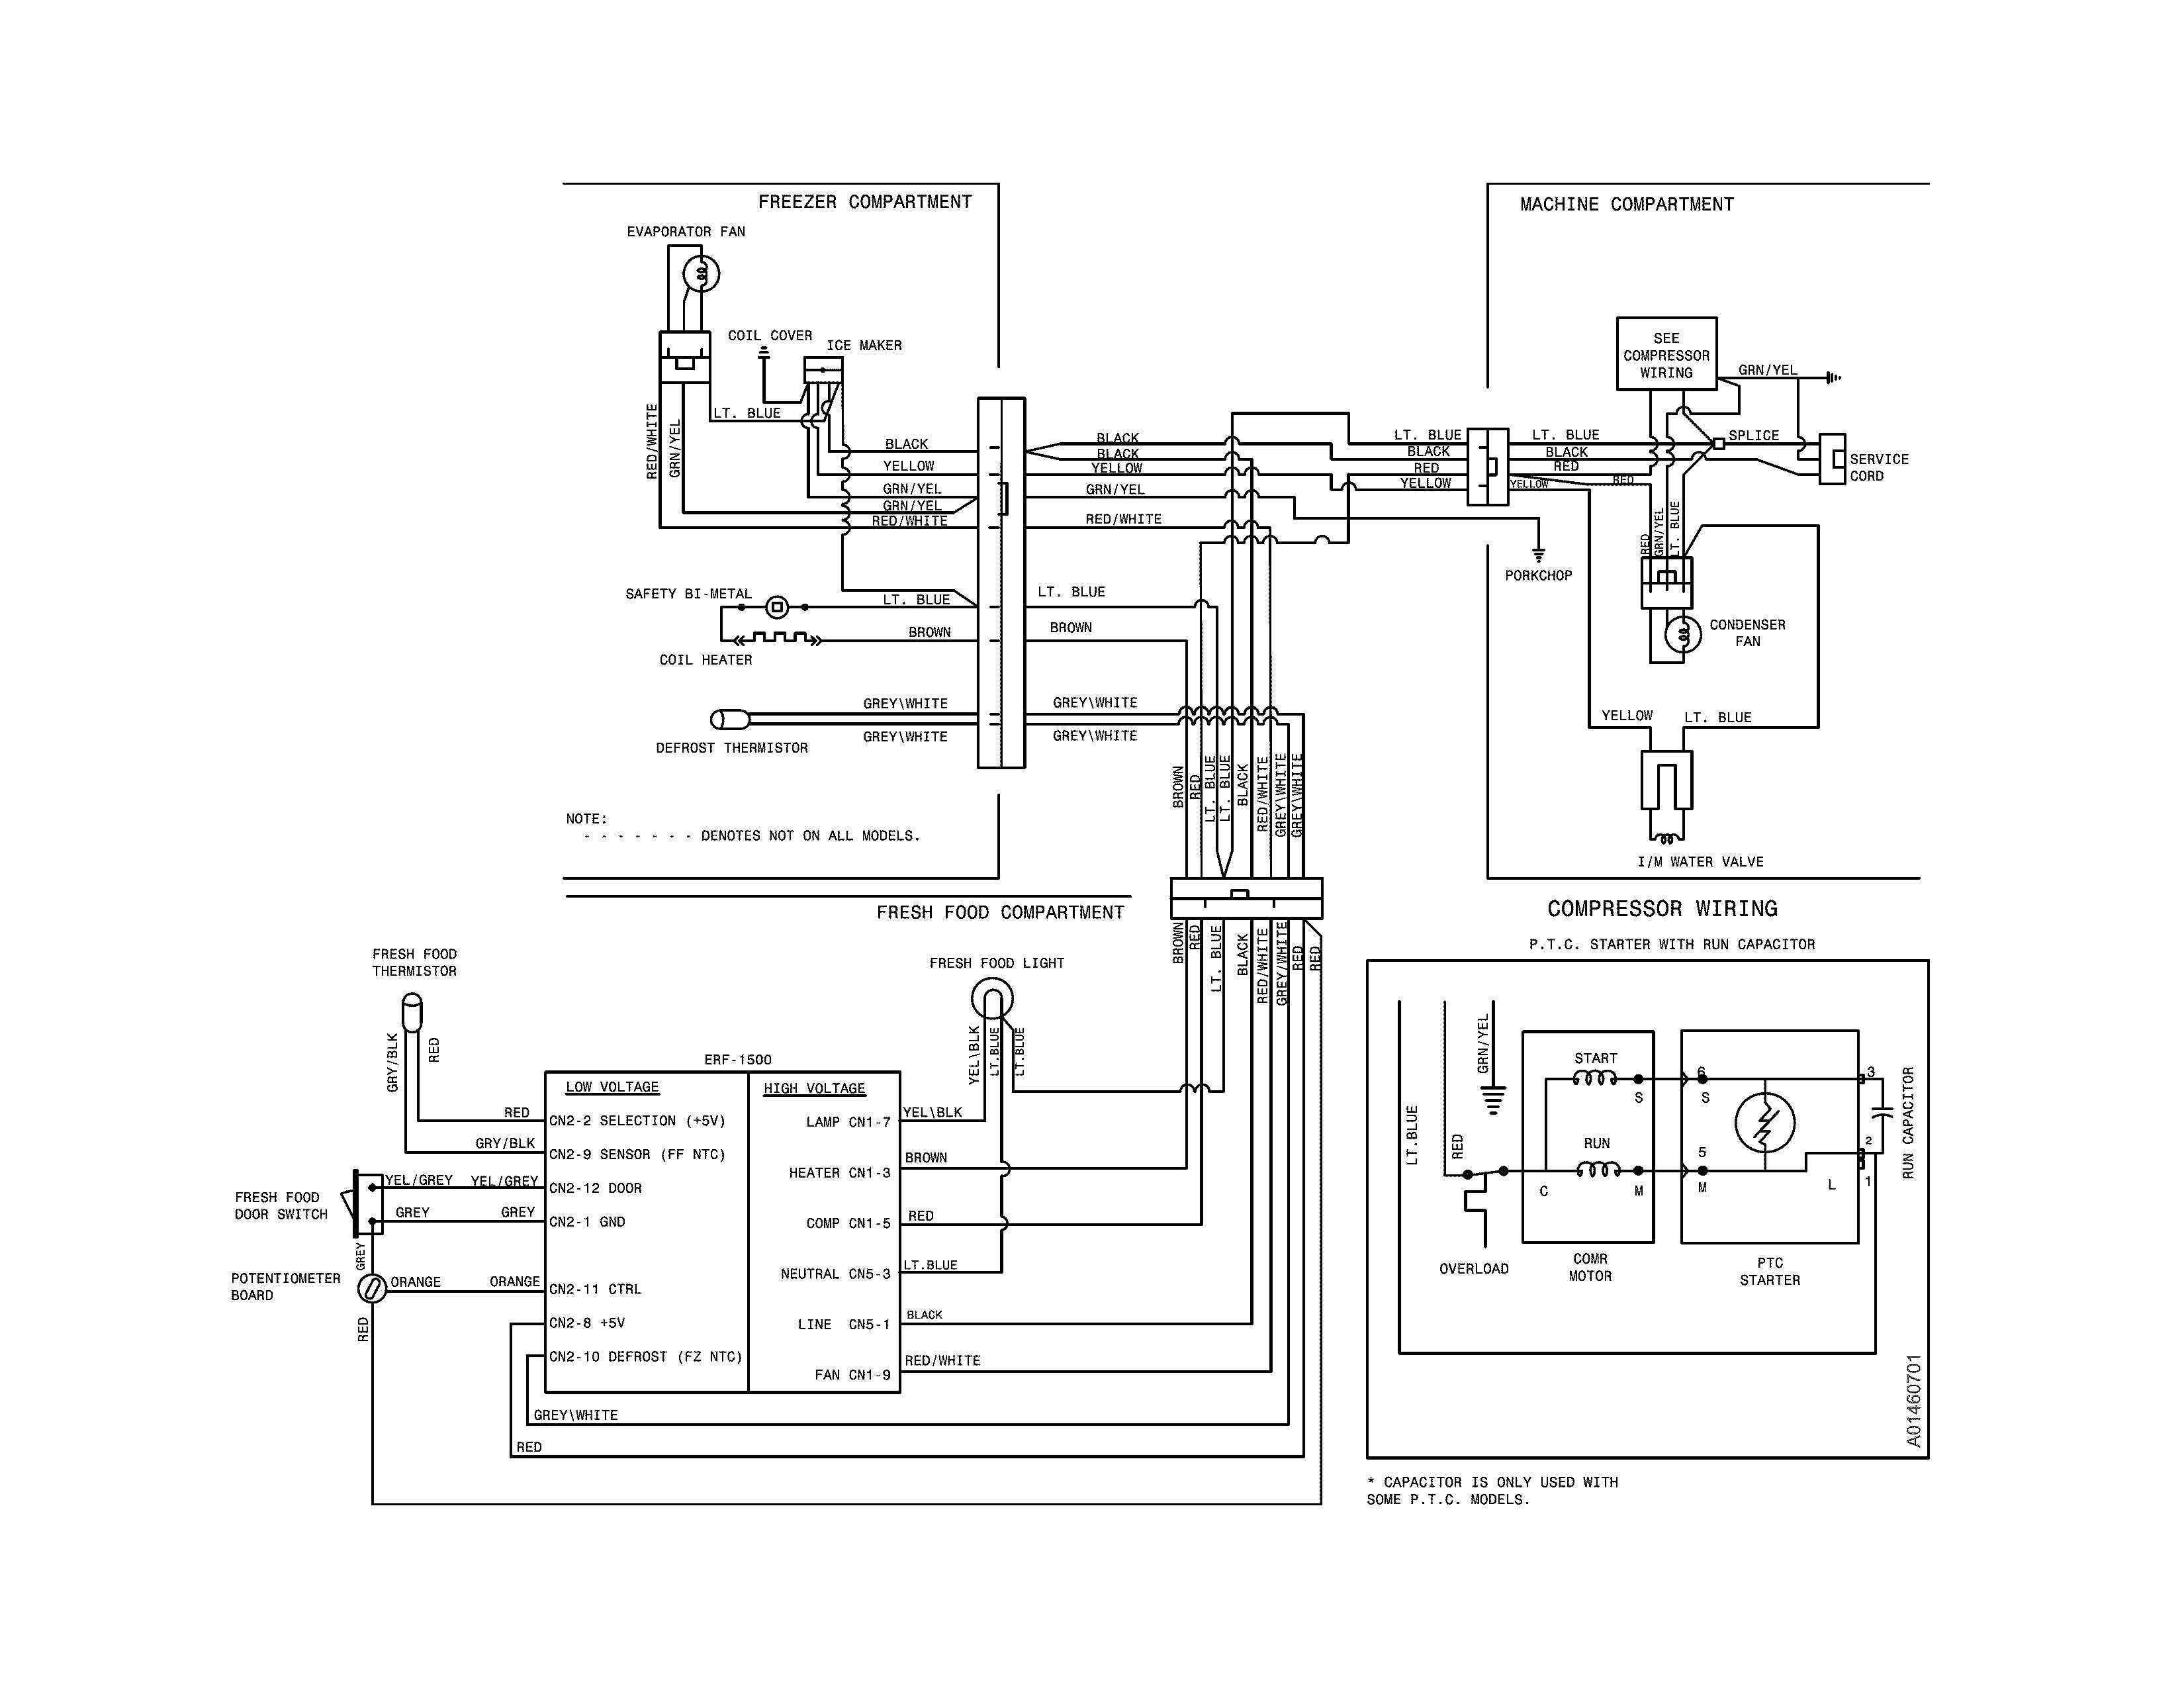 True Refrigerator Compressor Wiring Diagram | Wiring Diagram - Refrigerator Compressor Wiring Diagram